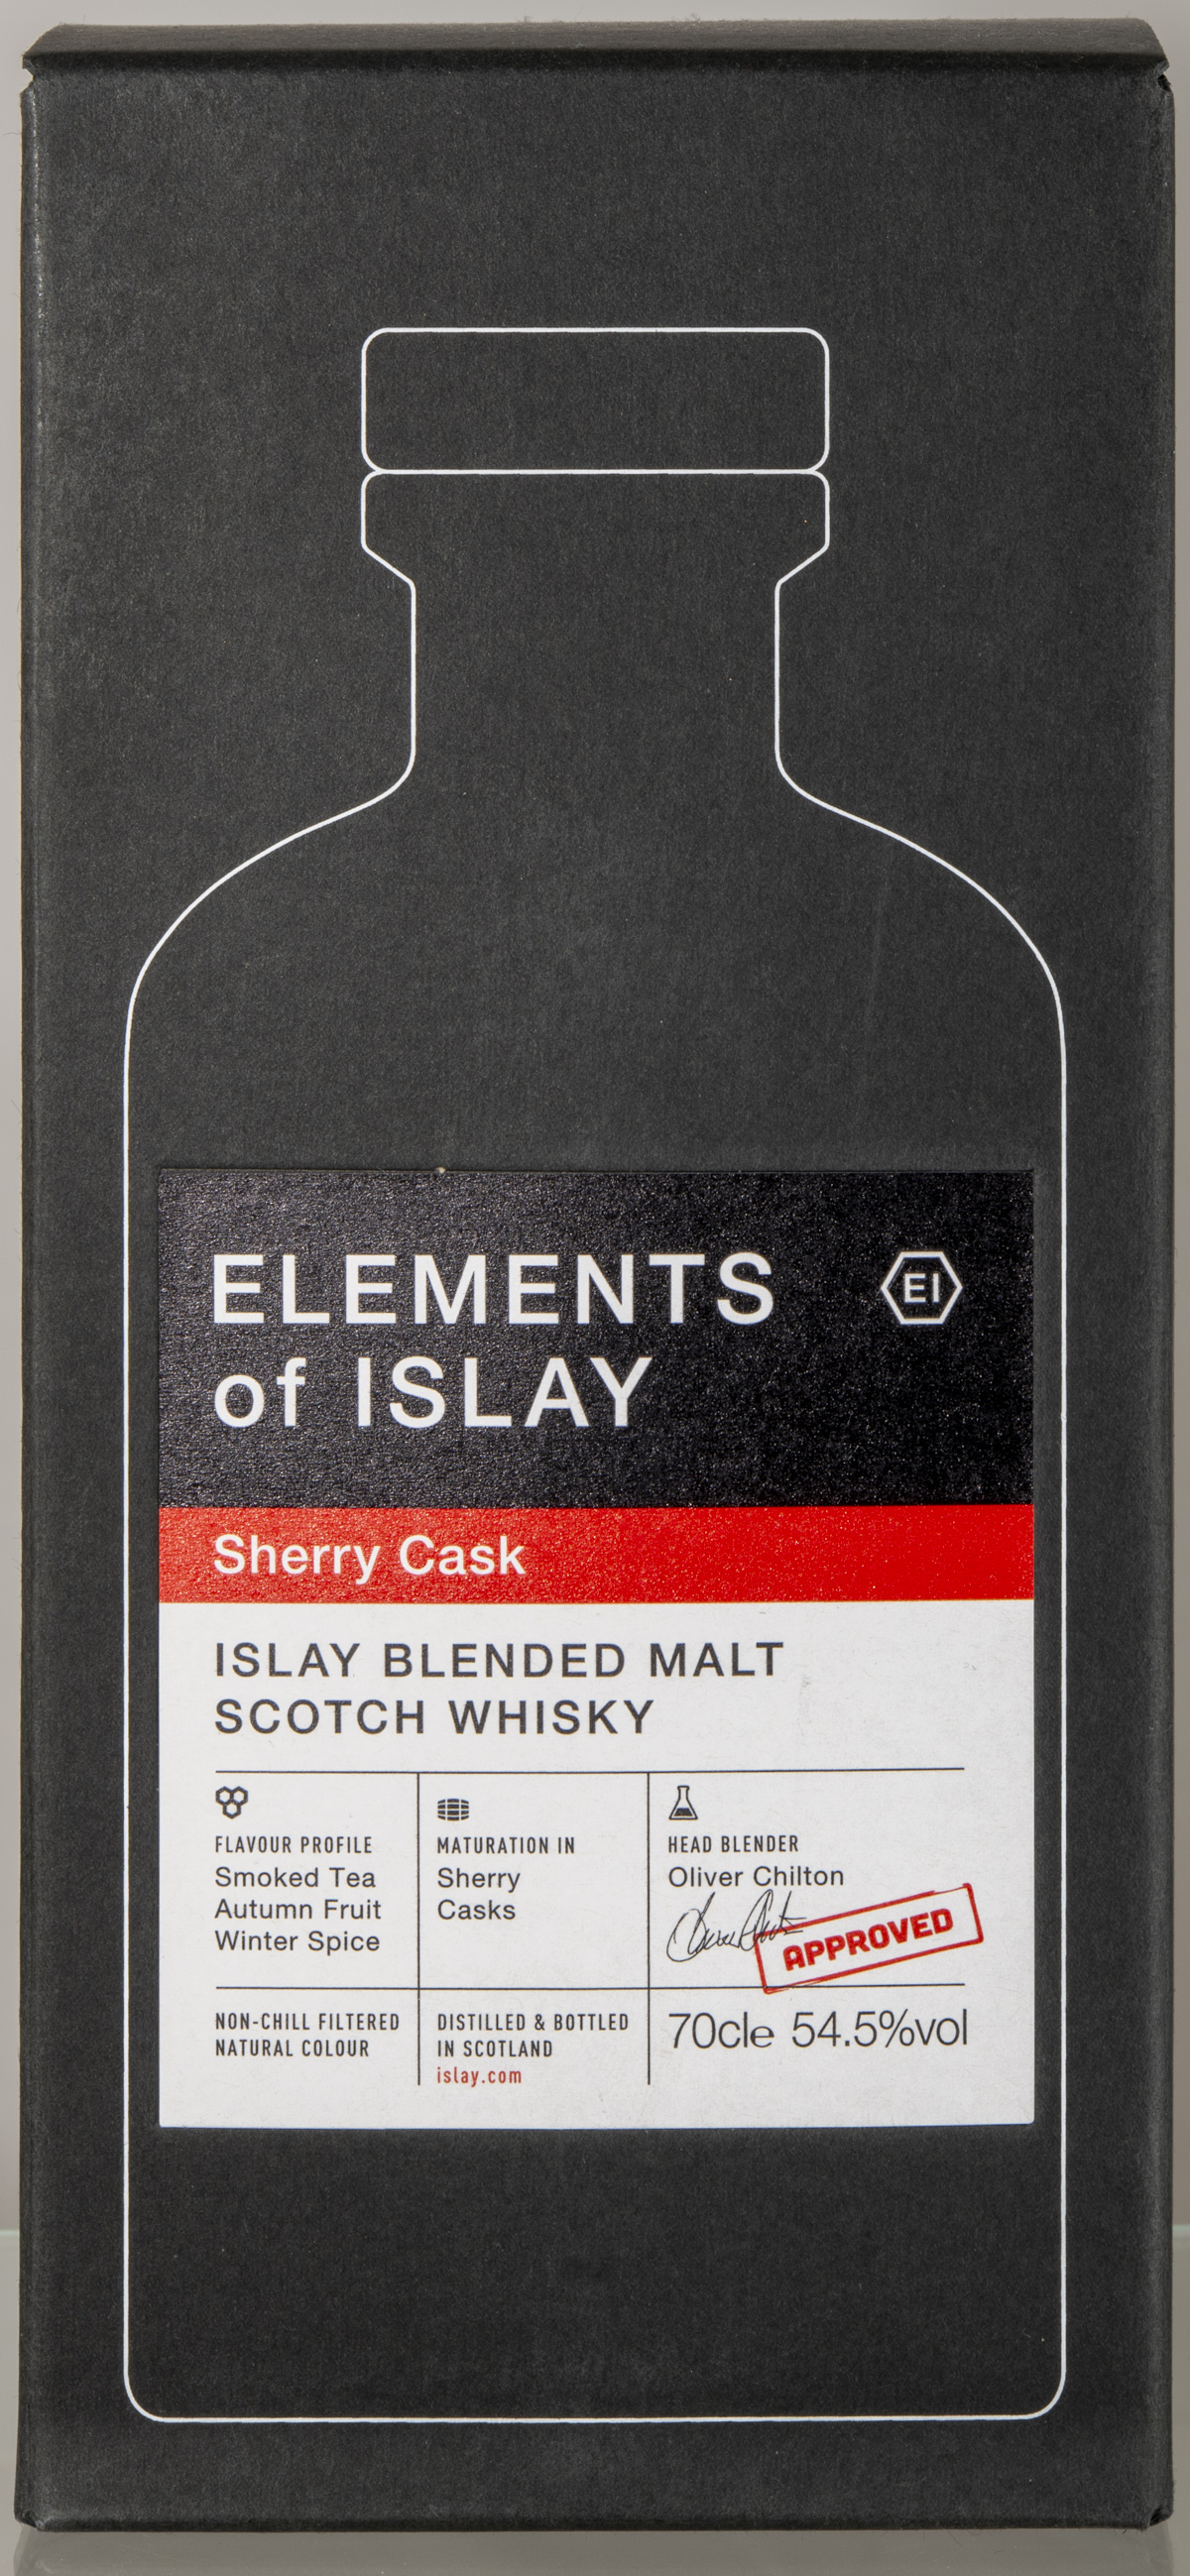 Billede: D85_8318 - Elements of Islay - Sherry Cask - box front.jpg